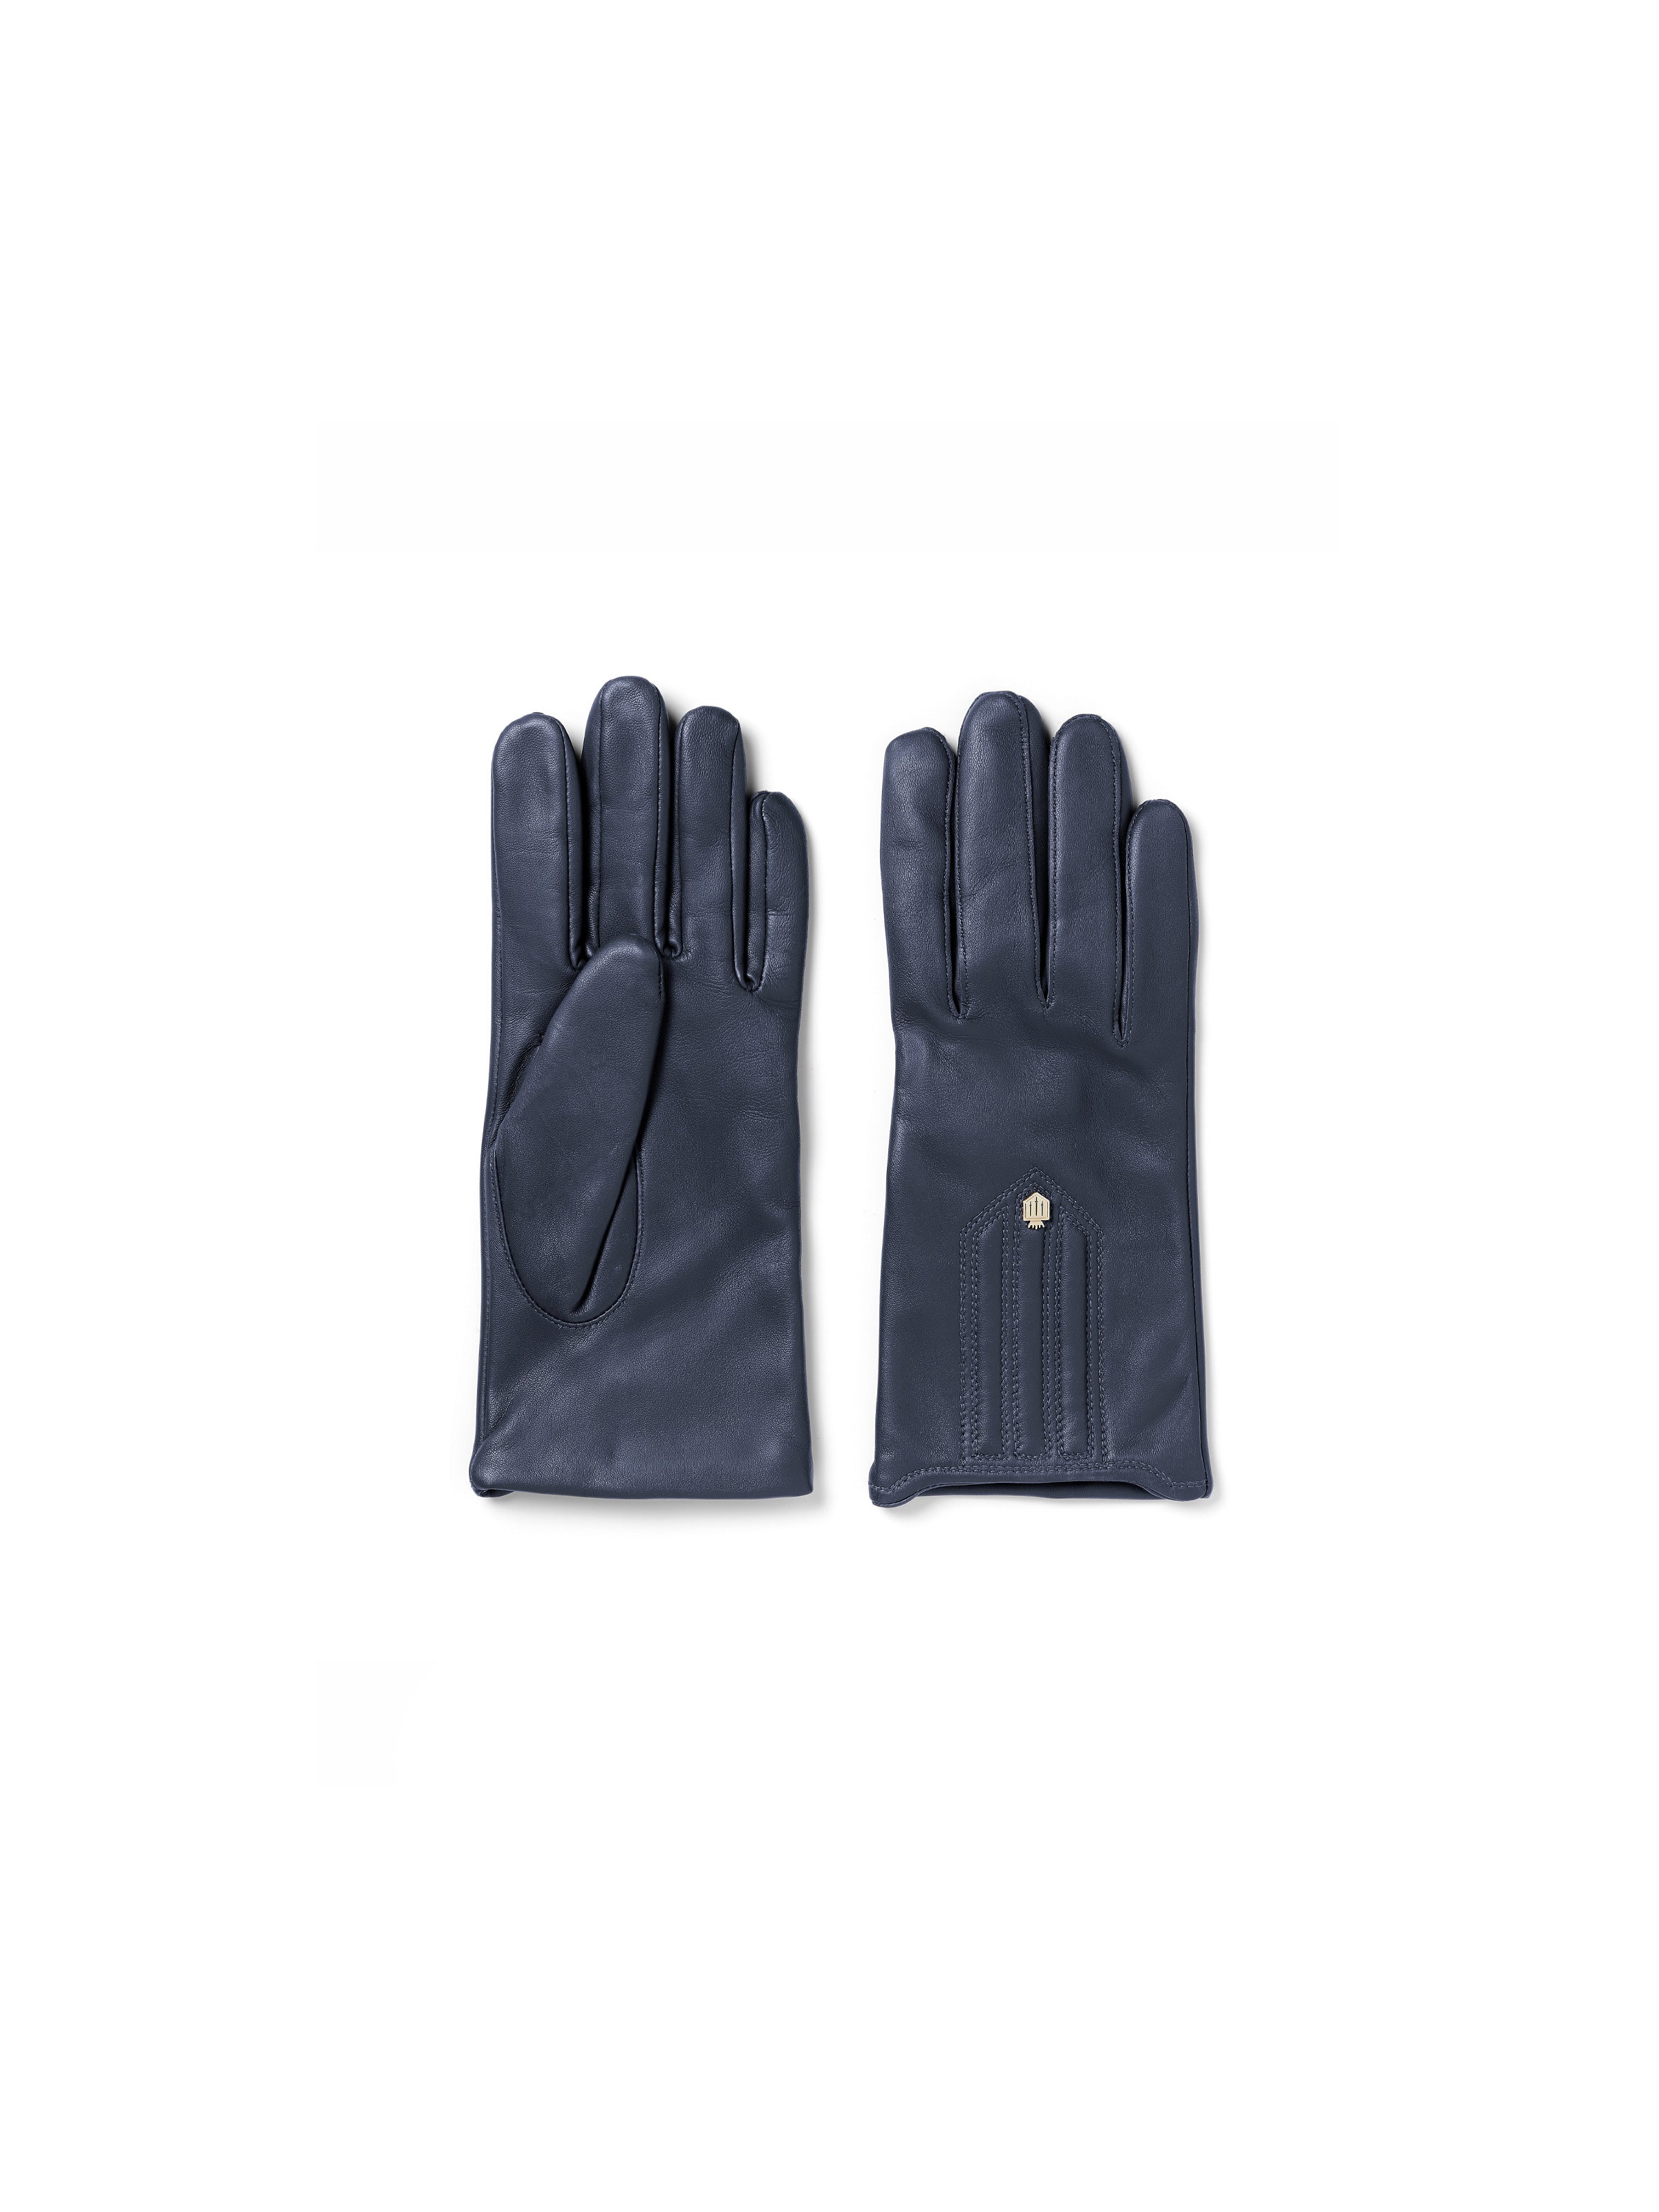 Signature Gloves - Women's Gloves - Navy Leather | Fairfax & Favor